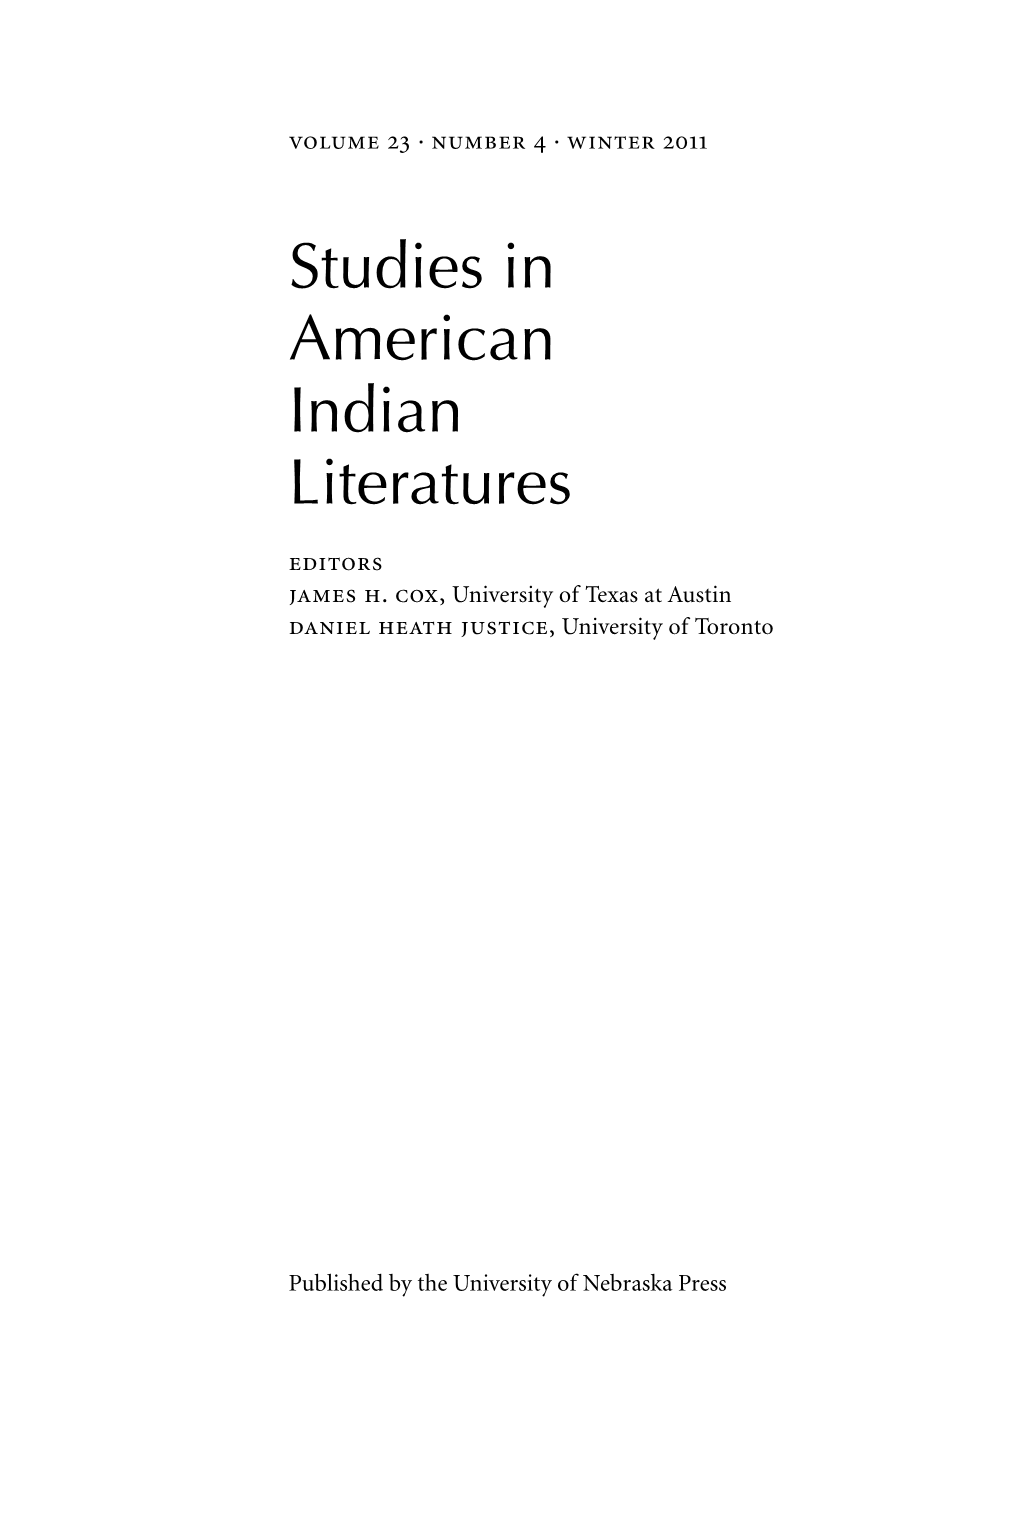 Studies in American Indian Literatures Editors James H